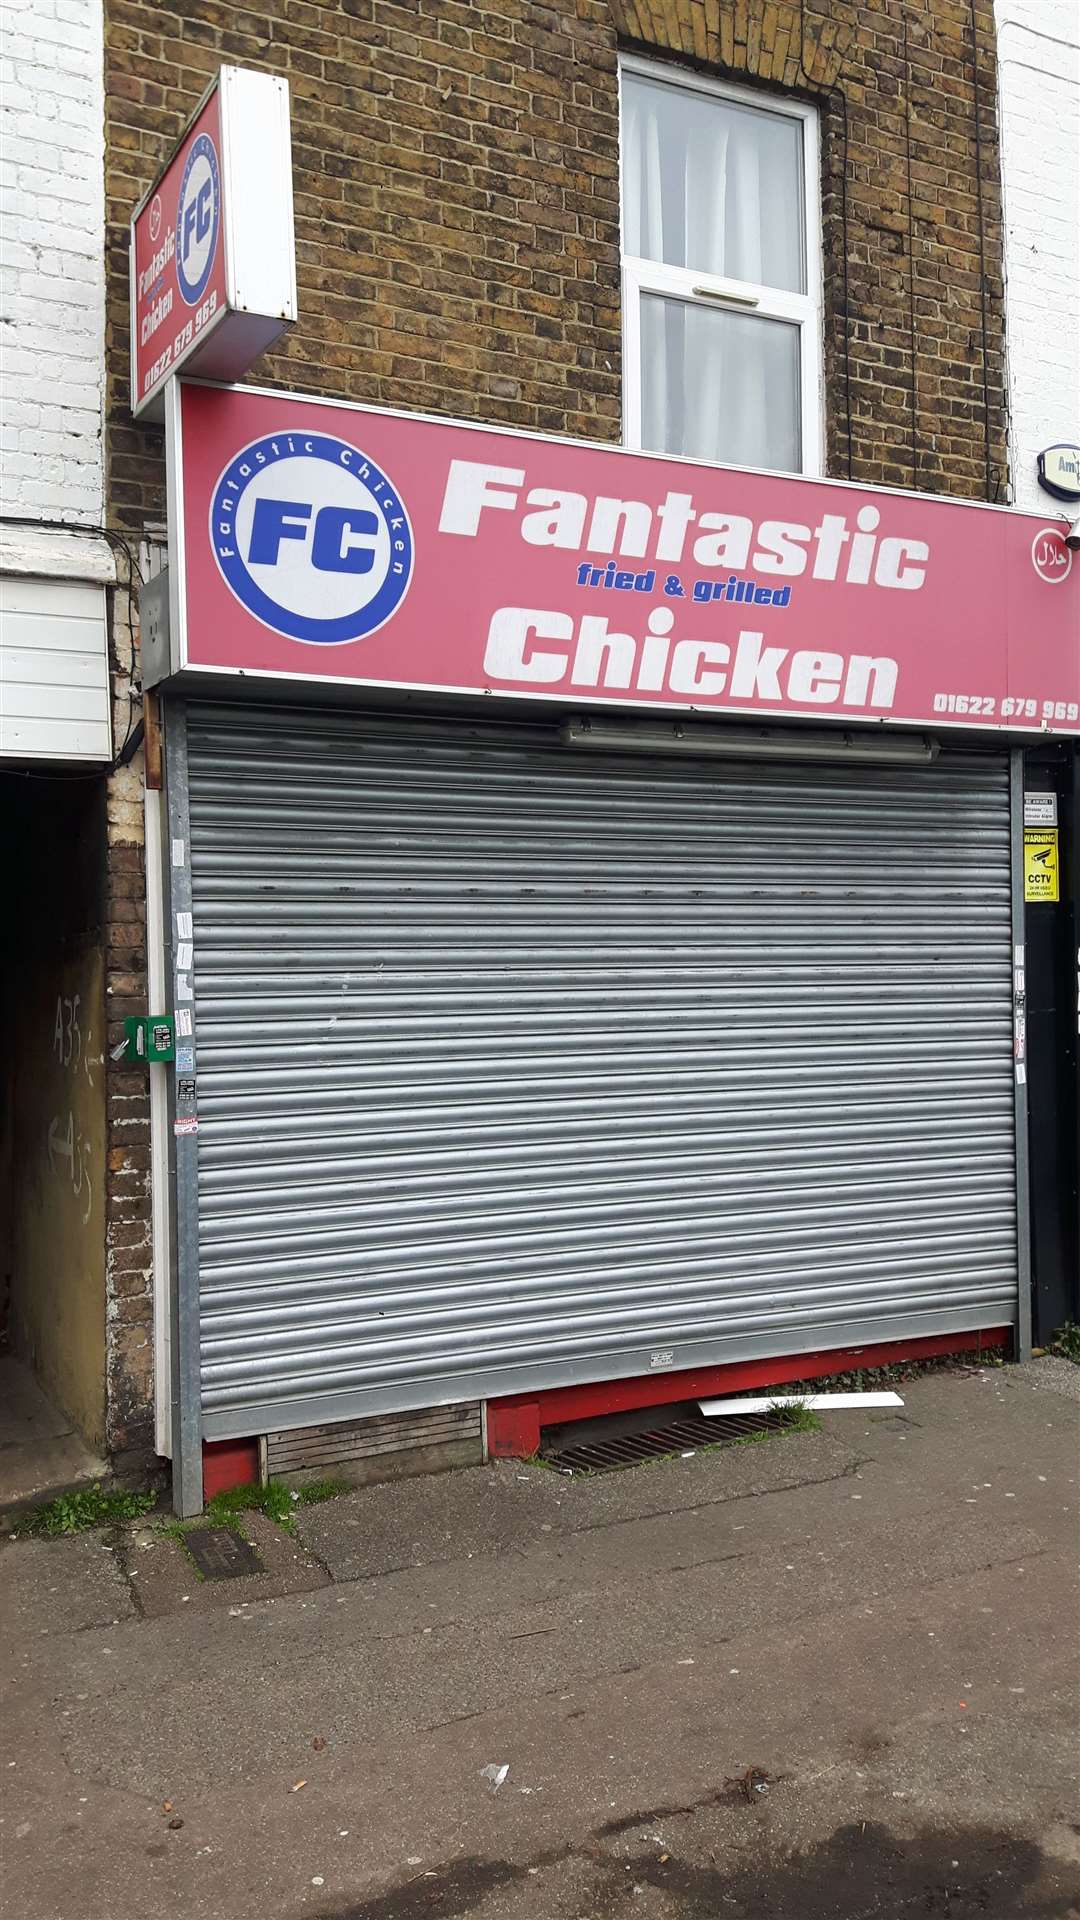 Fantastic Chicken in Sandling Road, Maidstone